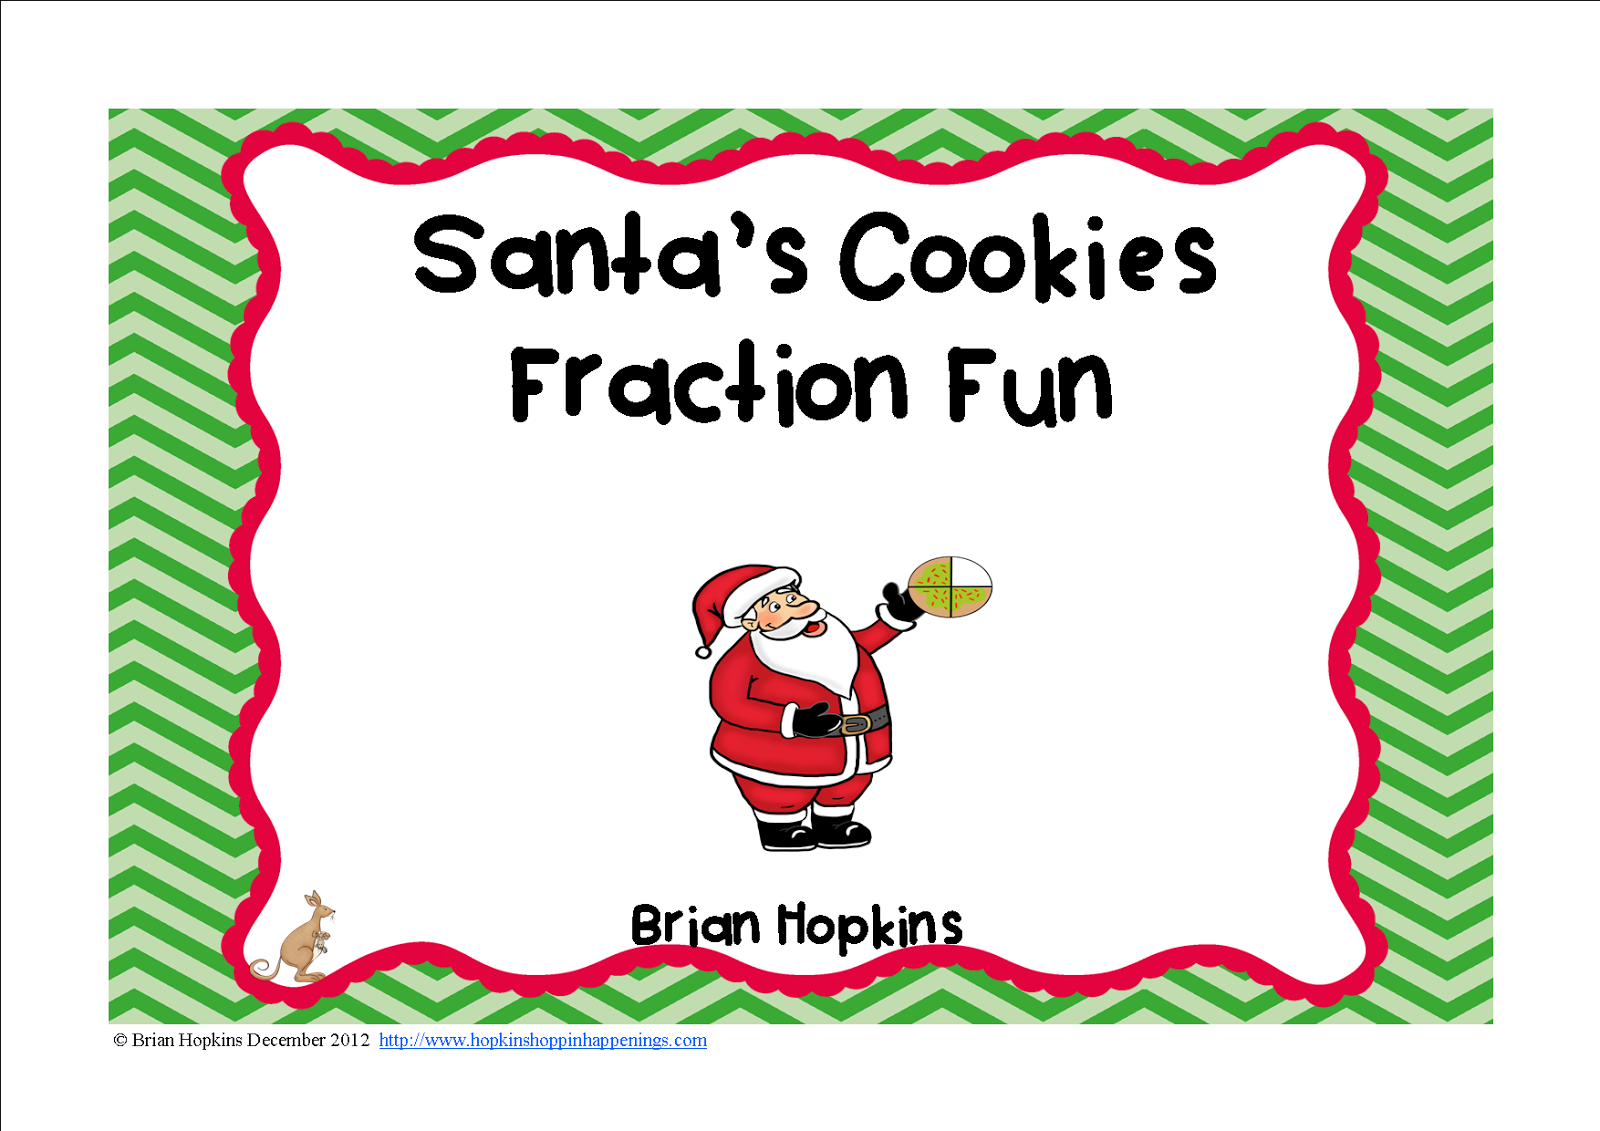  Santa's Cookies Fractions